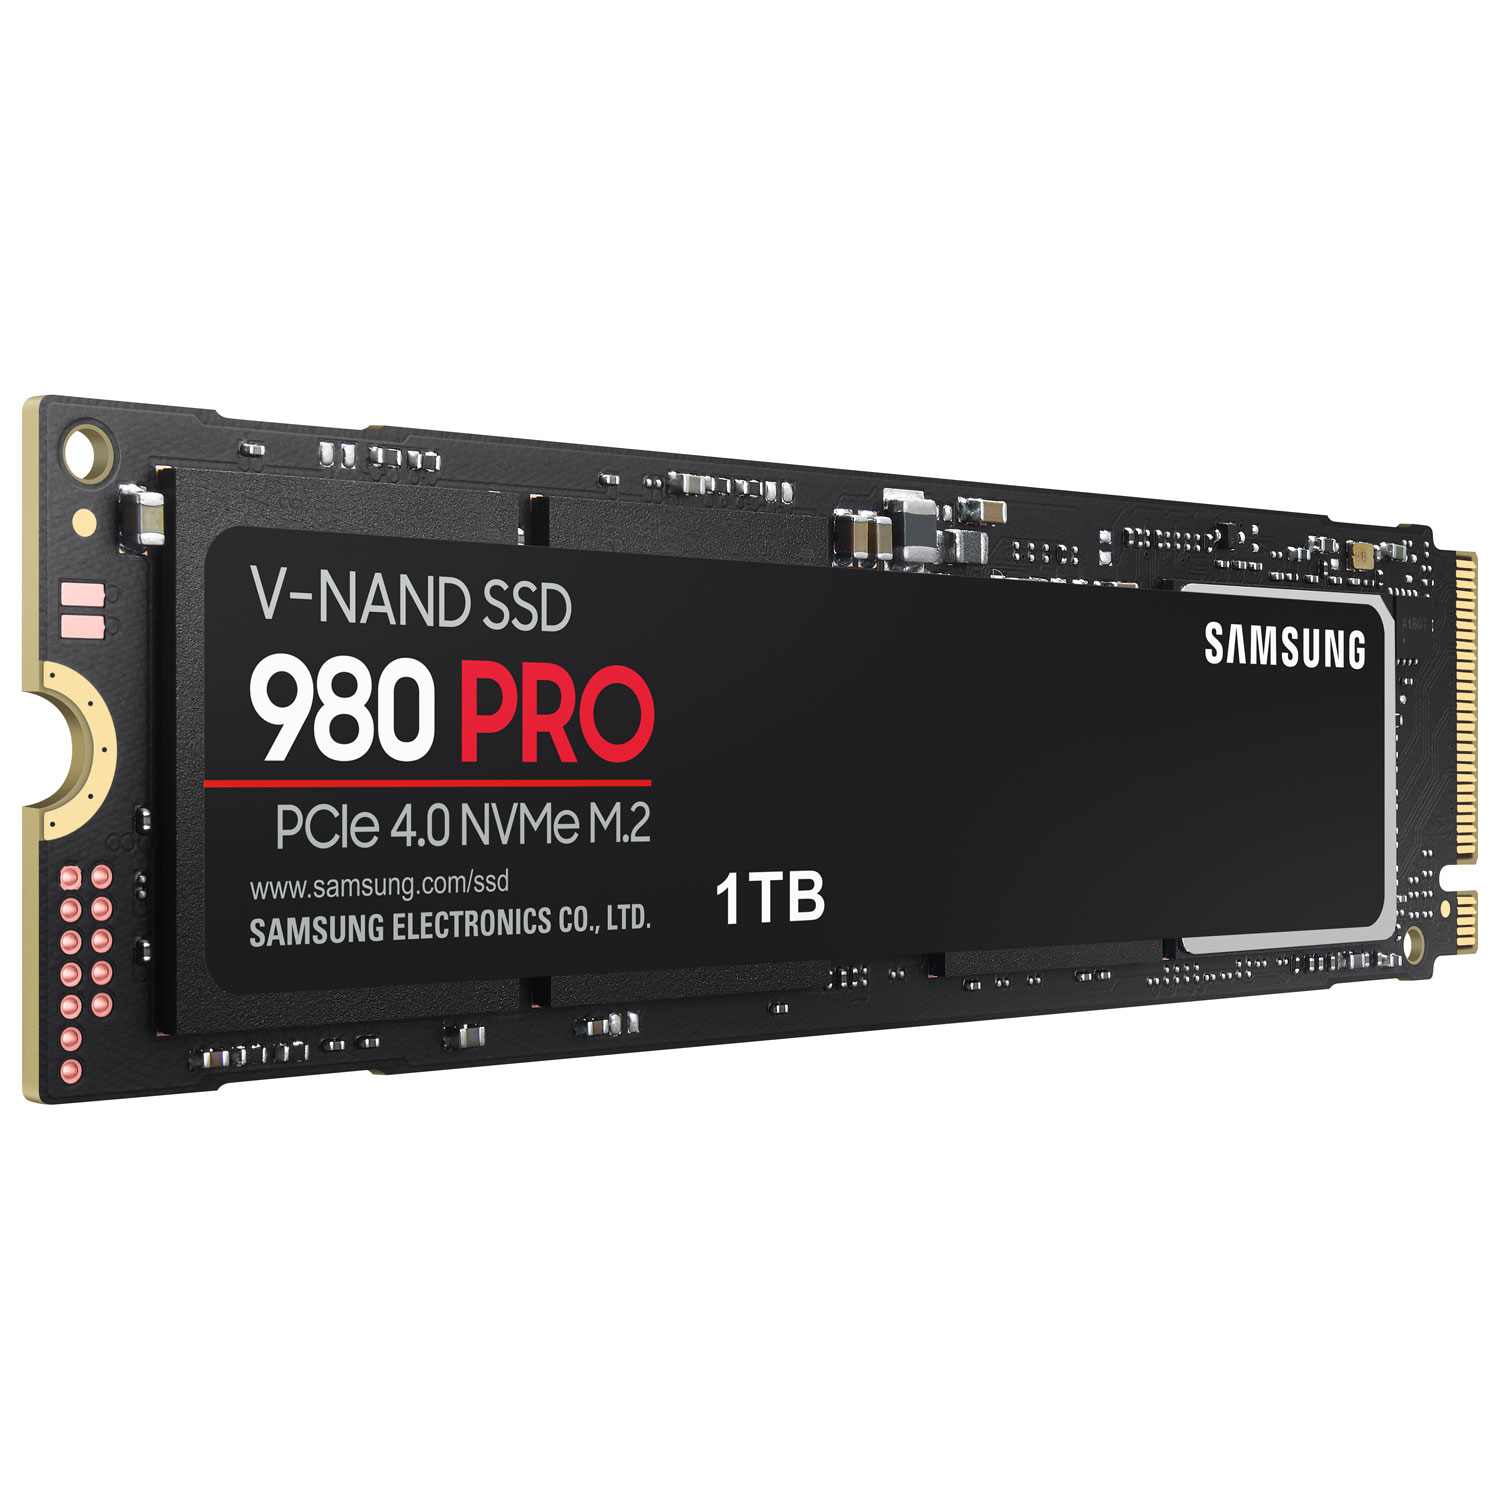 Samsung 980 Pro 1TB NVMe PCI-e Internal Solid State Drive (MZ